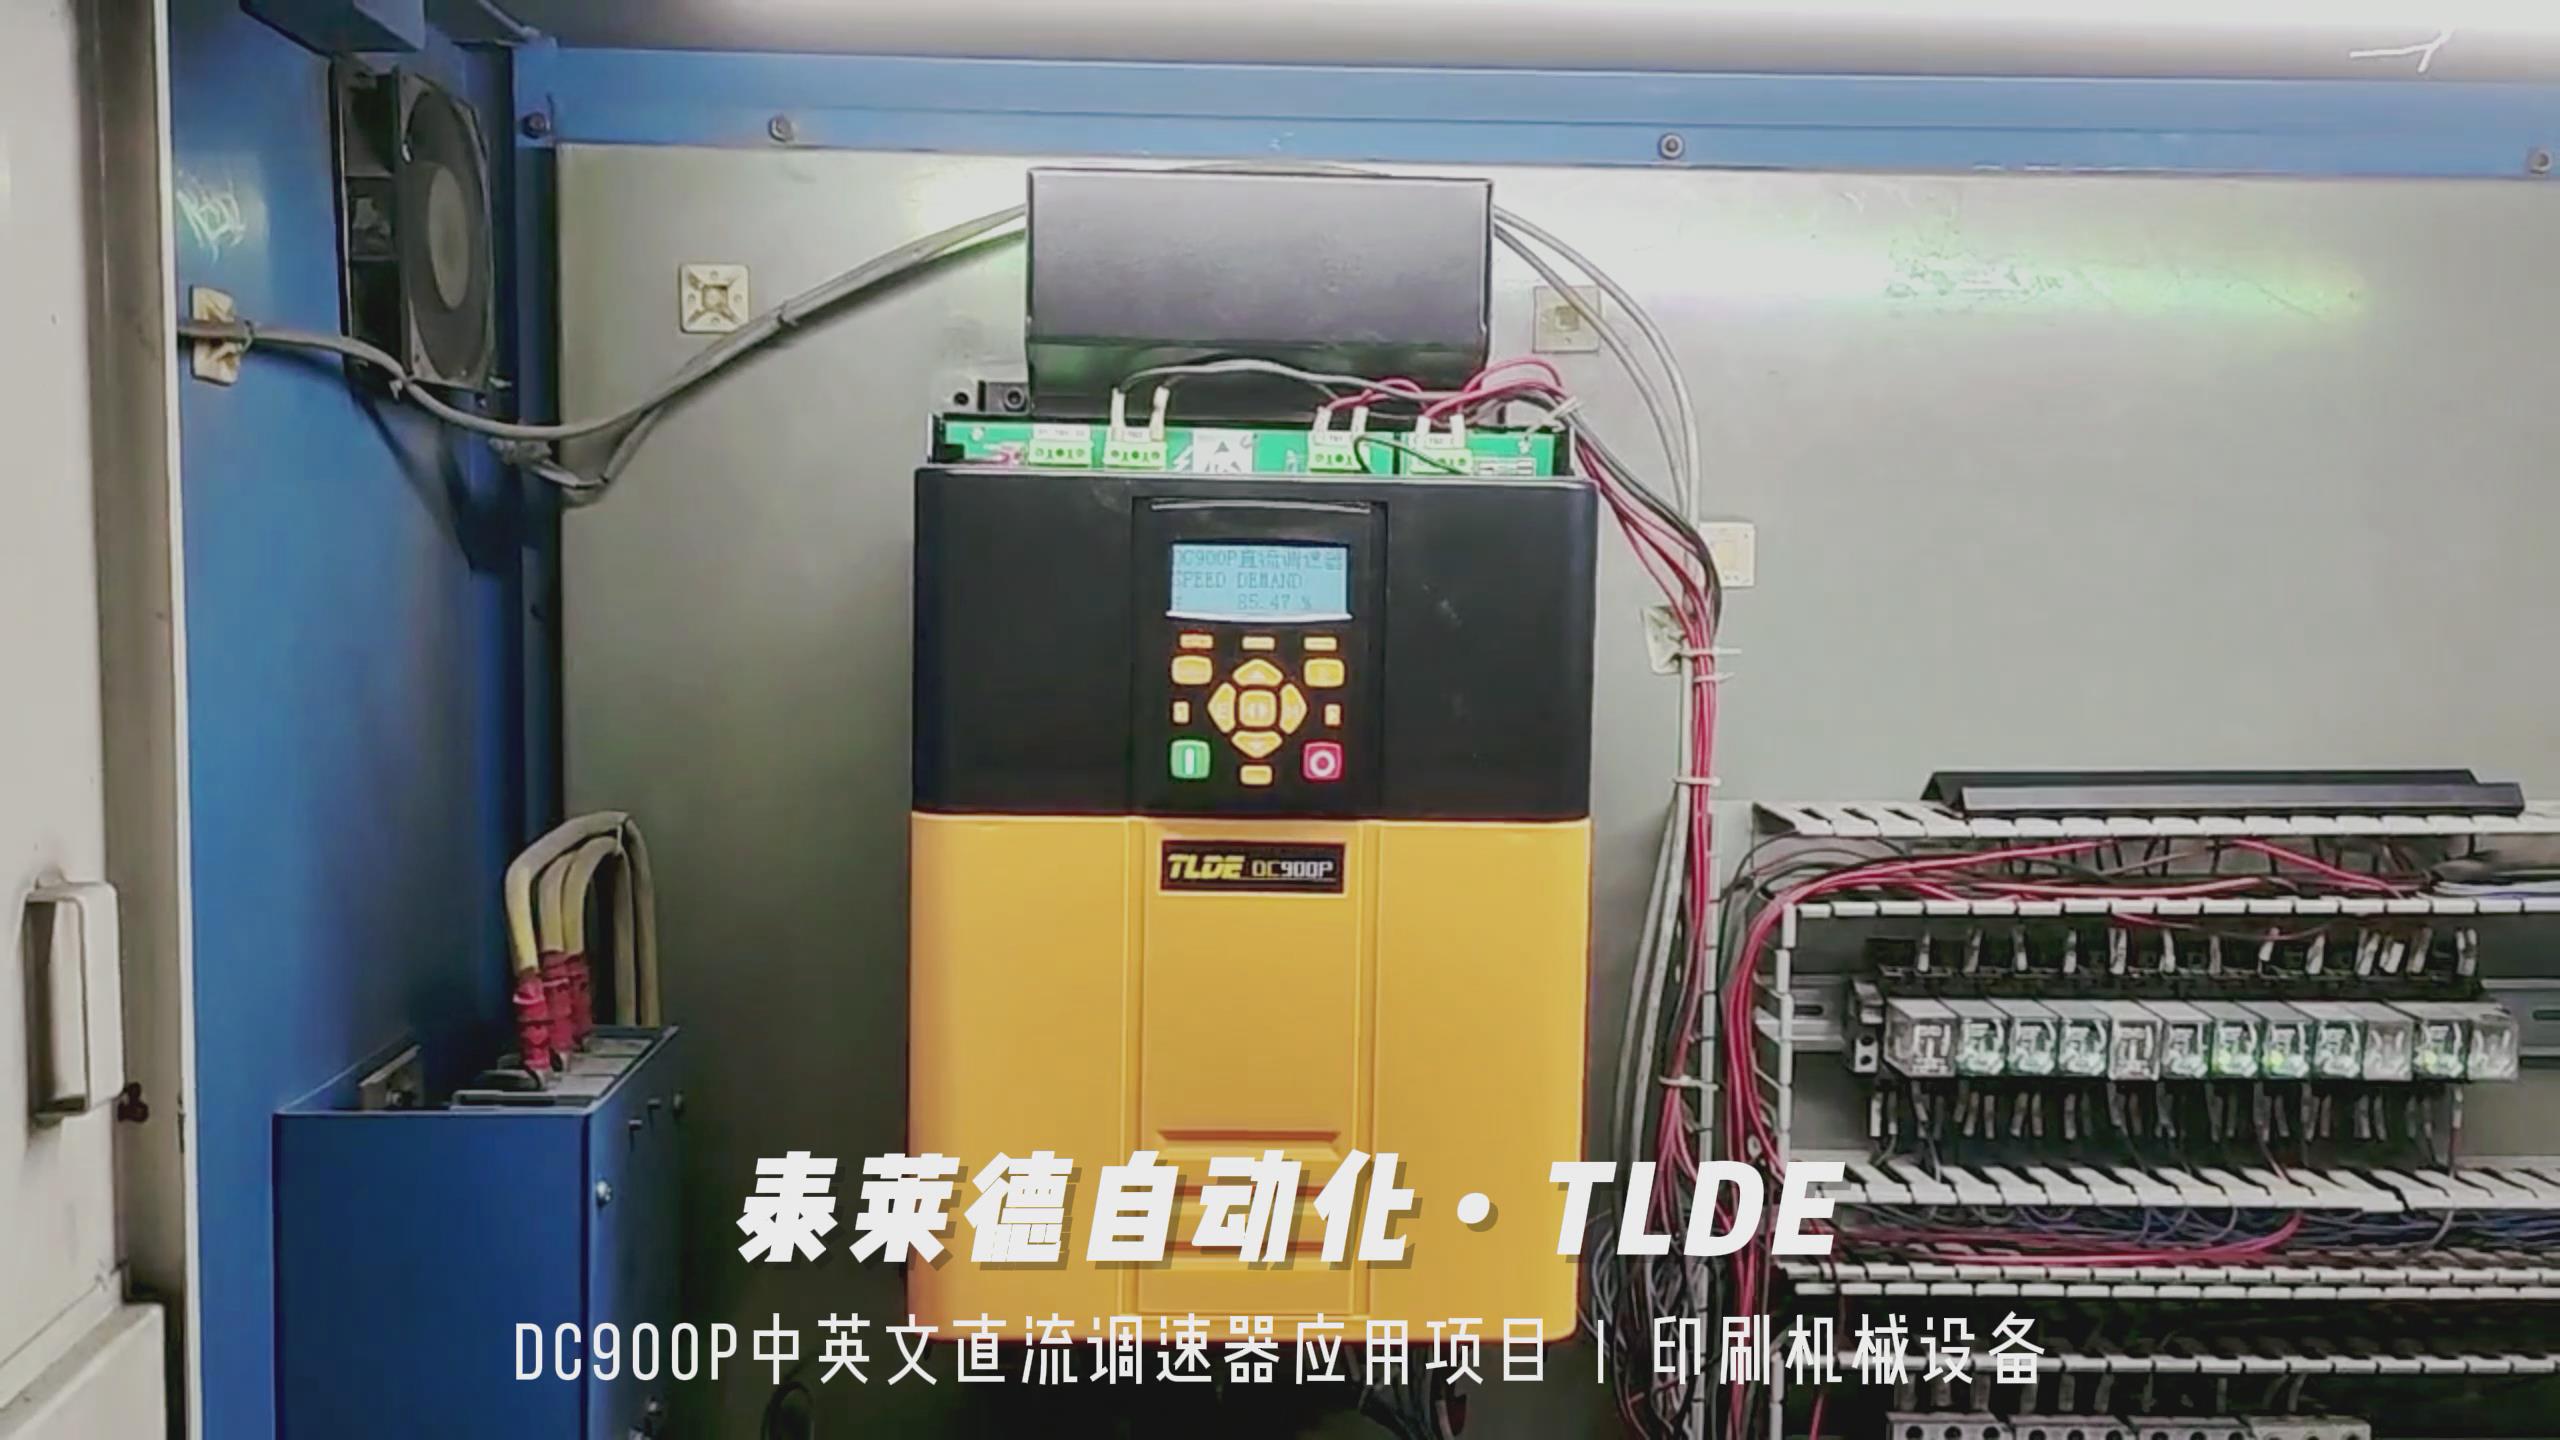 DC900P中英文直流调速器应用于印刷机械设备！